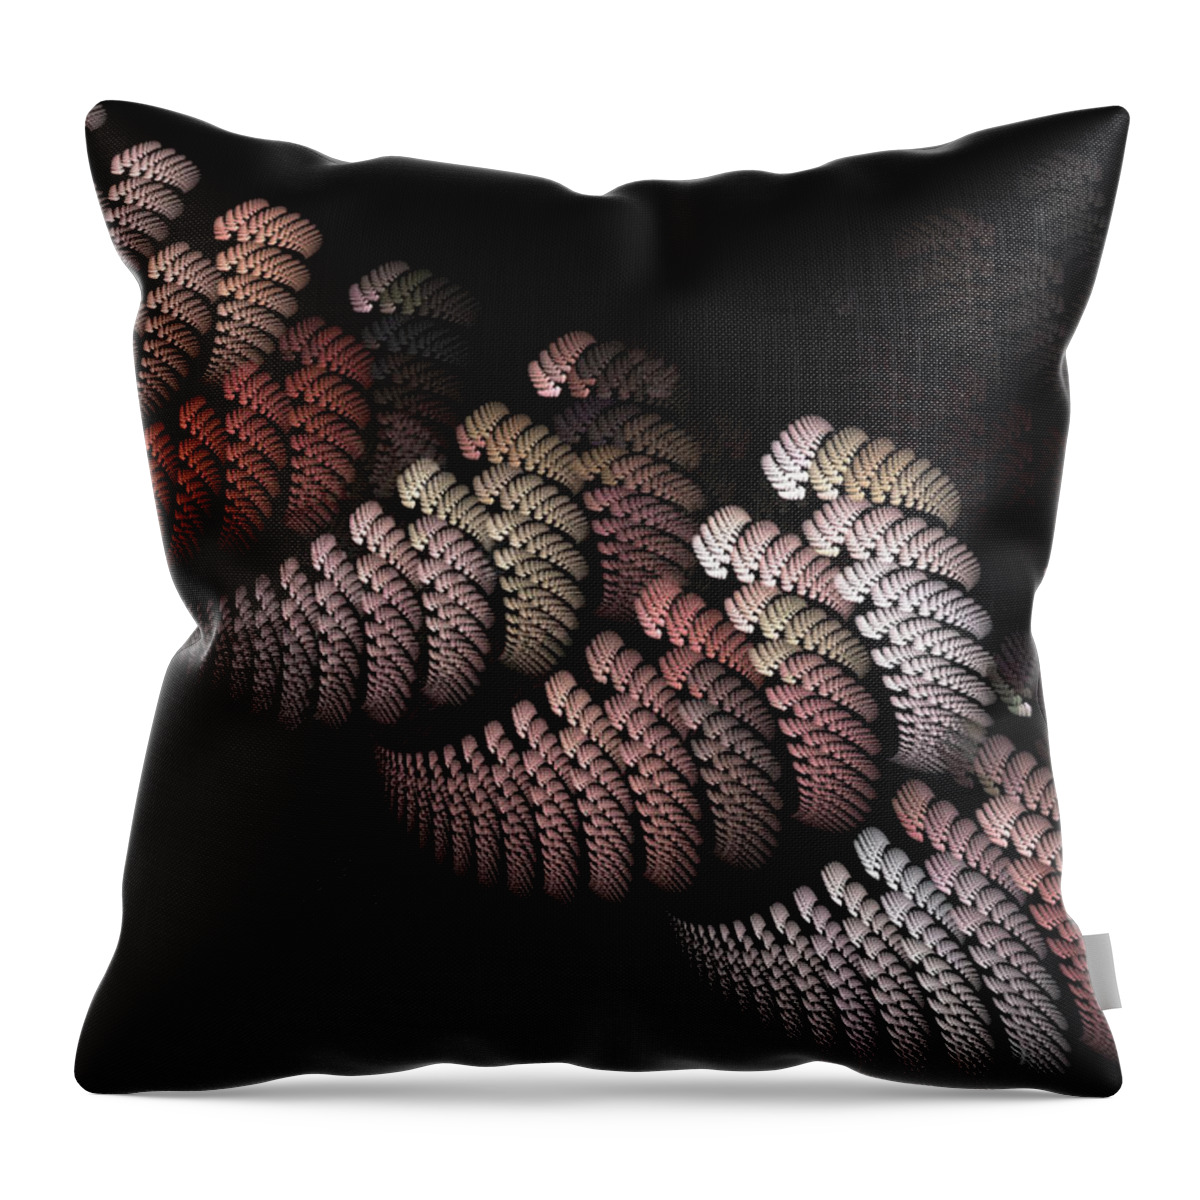 Geometric Fractal Throw Pillow featuring the digital art Woven by Bonnie Bruno